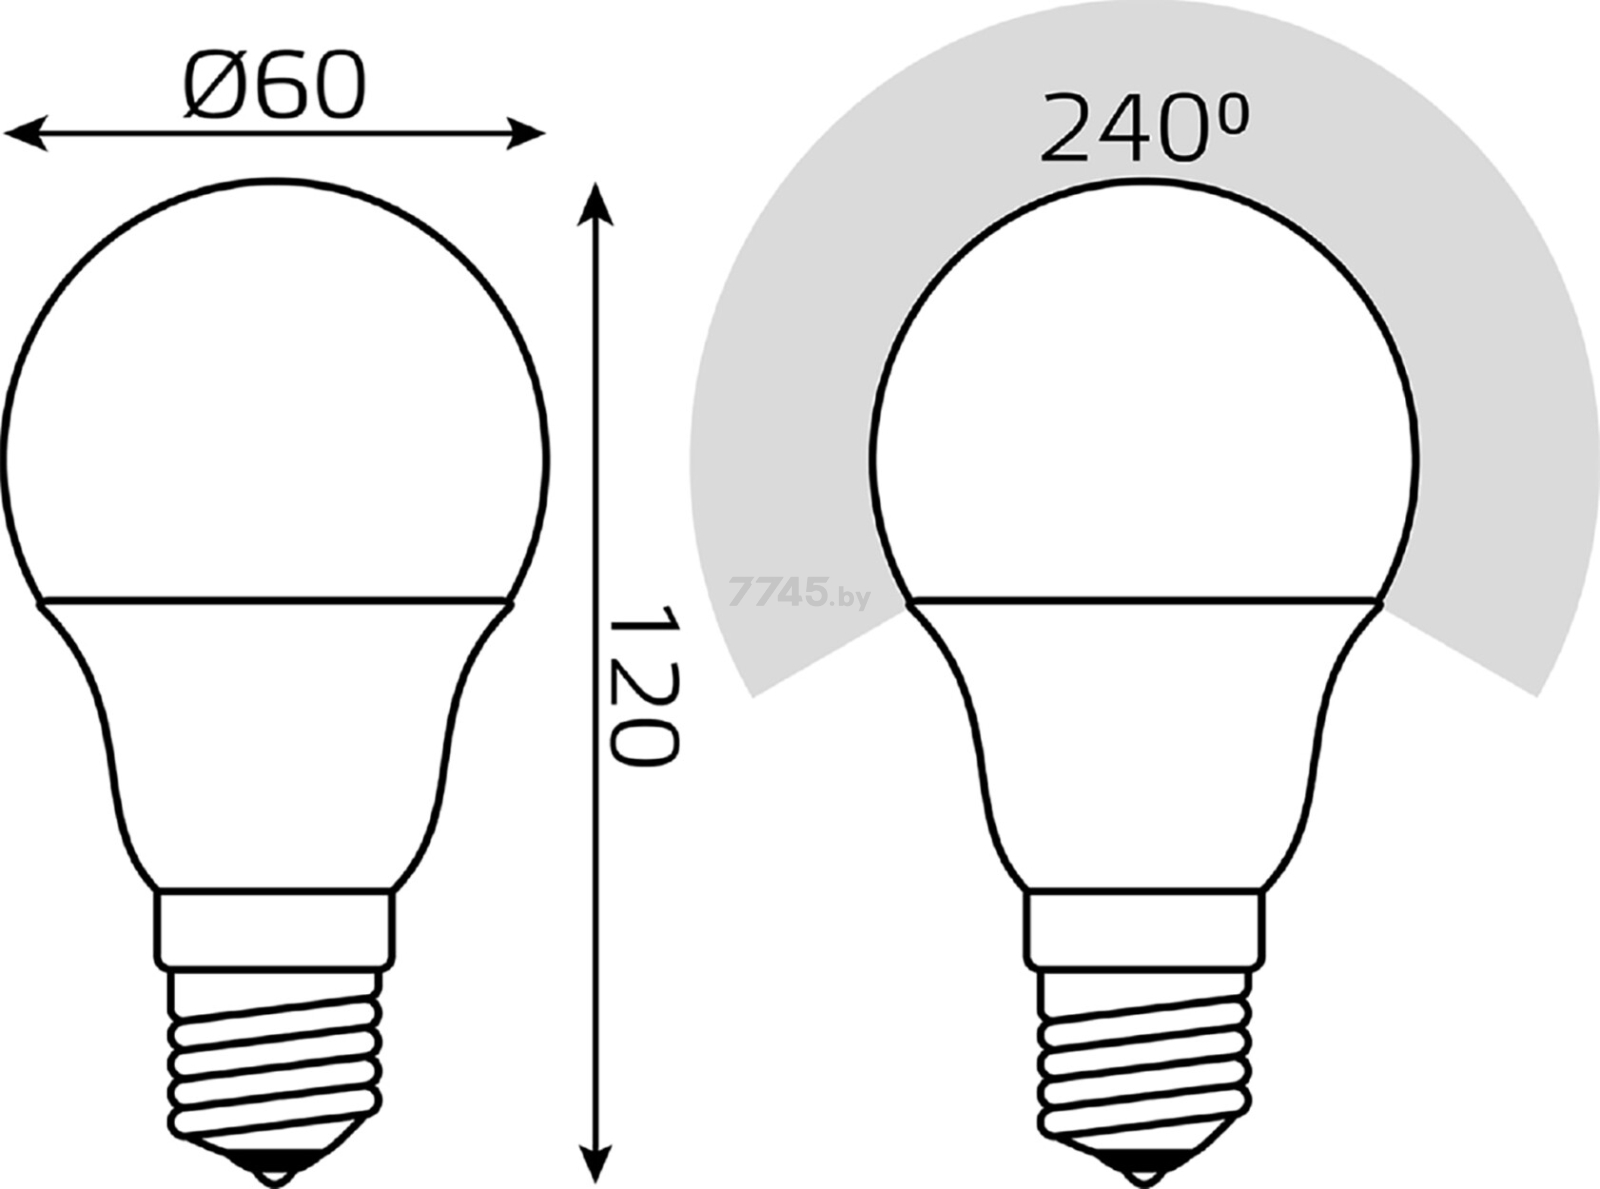 Лампа светодиодная E27 GAUSS 10 Вт 2700K/4100K CTC (102502110-T) - Фото 6